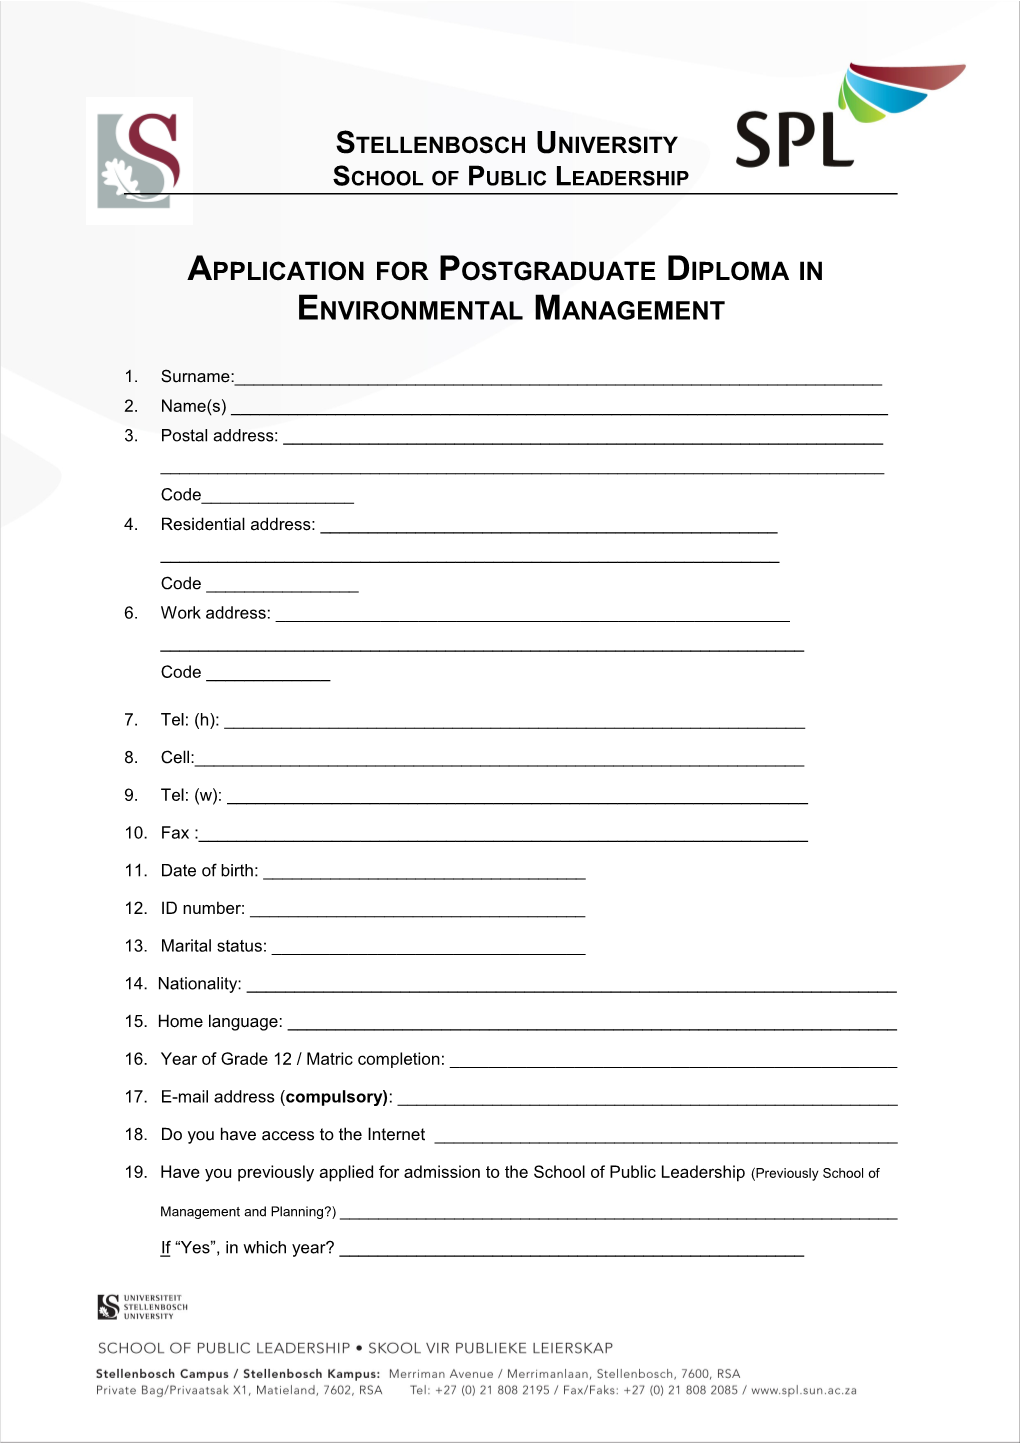 Application for Postgraduate Diploma In